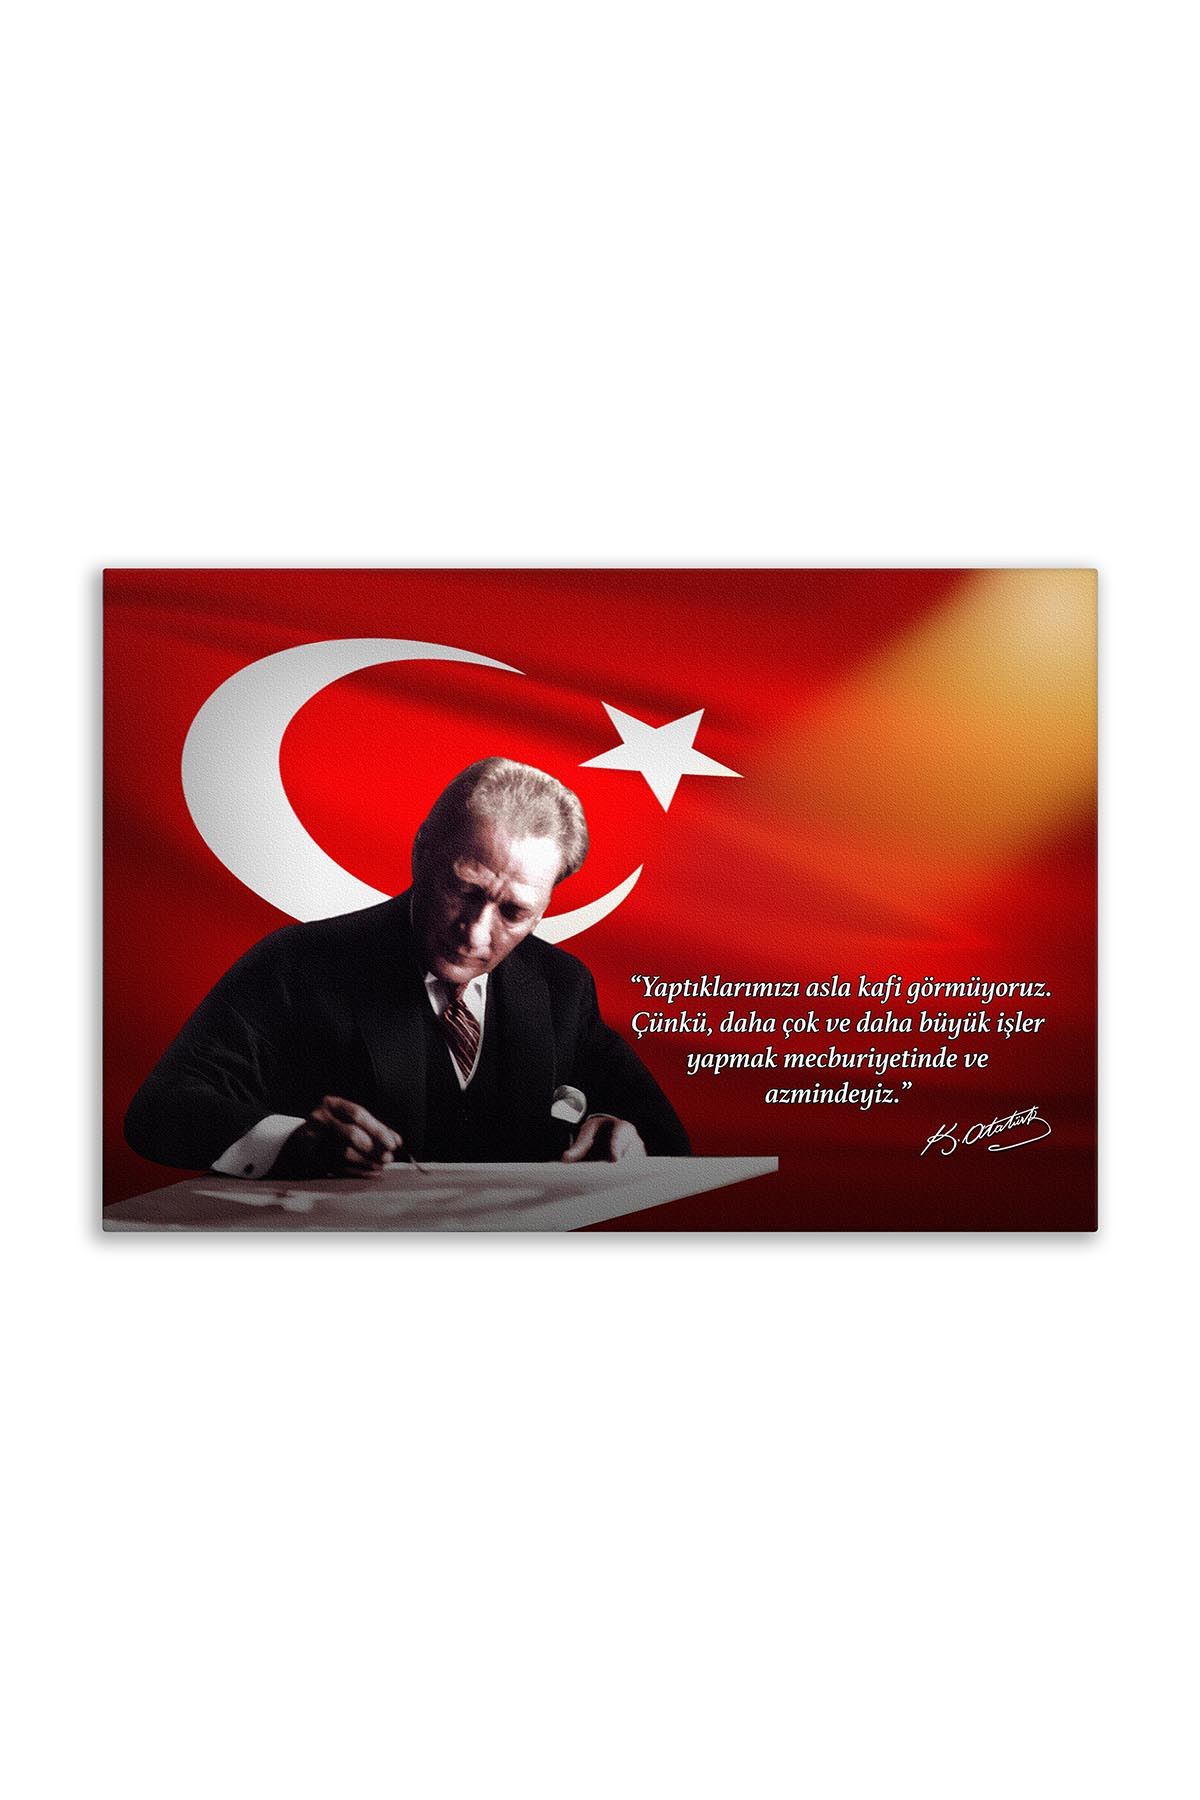 Atatürk Canvas Board With Turkish Flag | Printed Canvas Board  